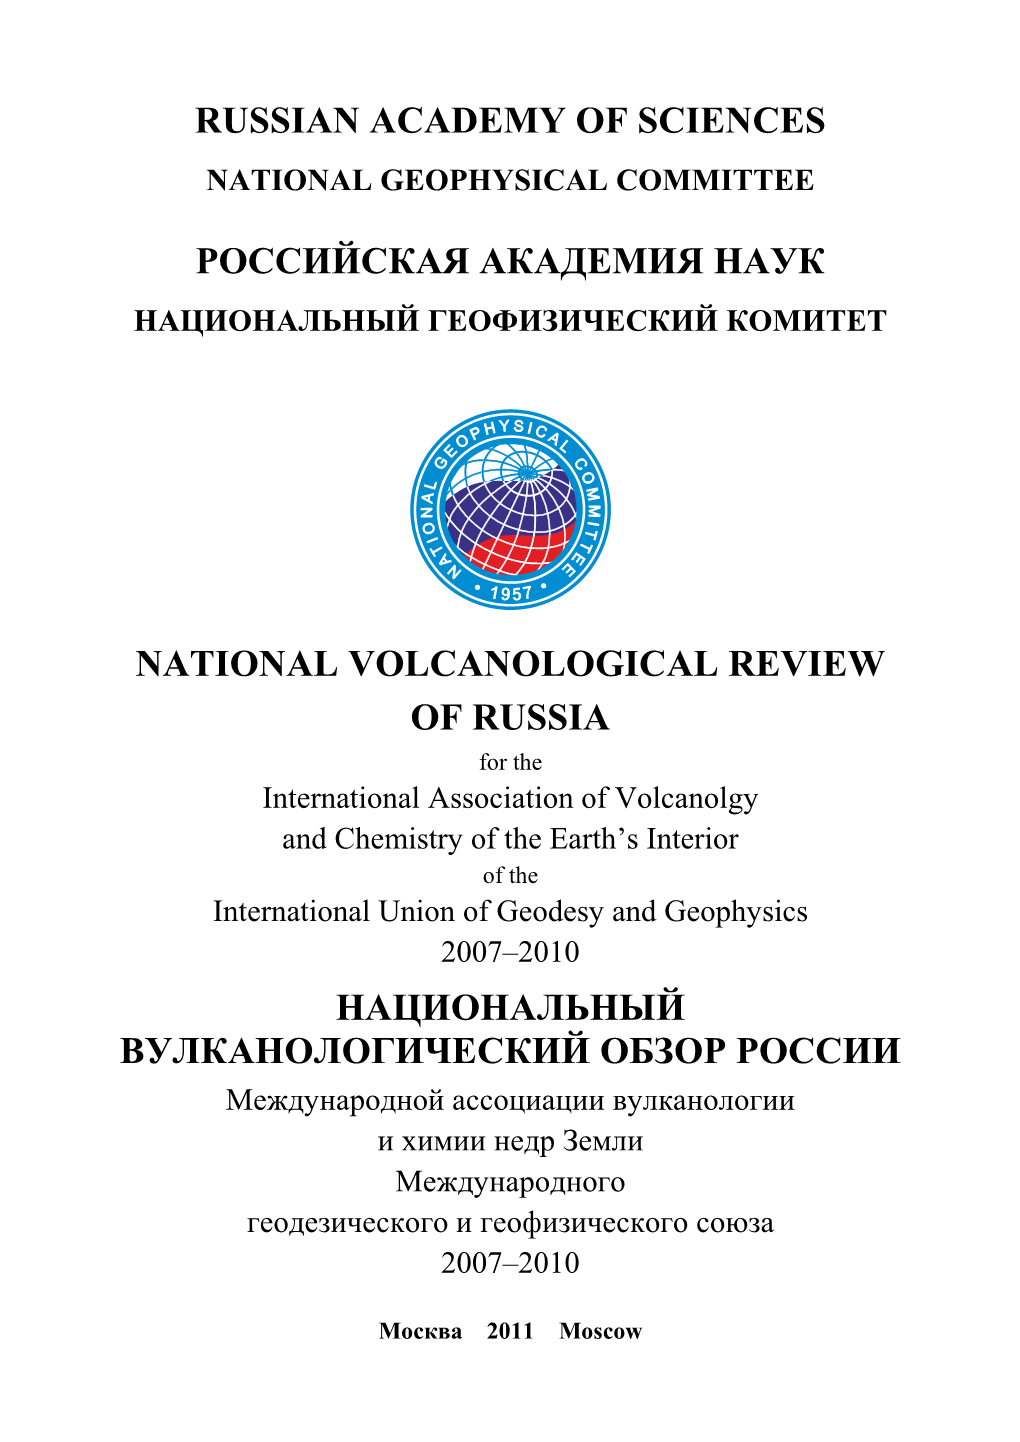 IAVCEI National Report Russia 2007-2010